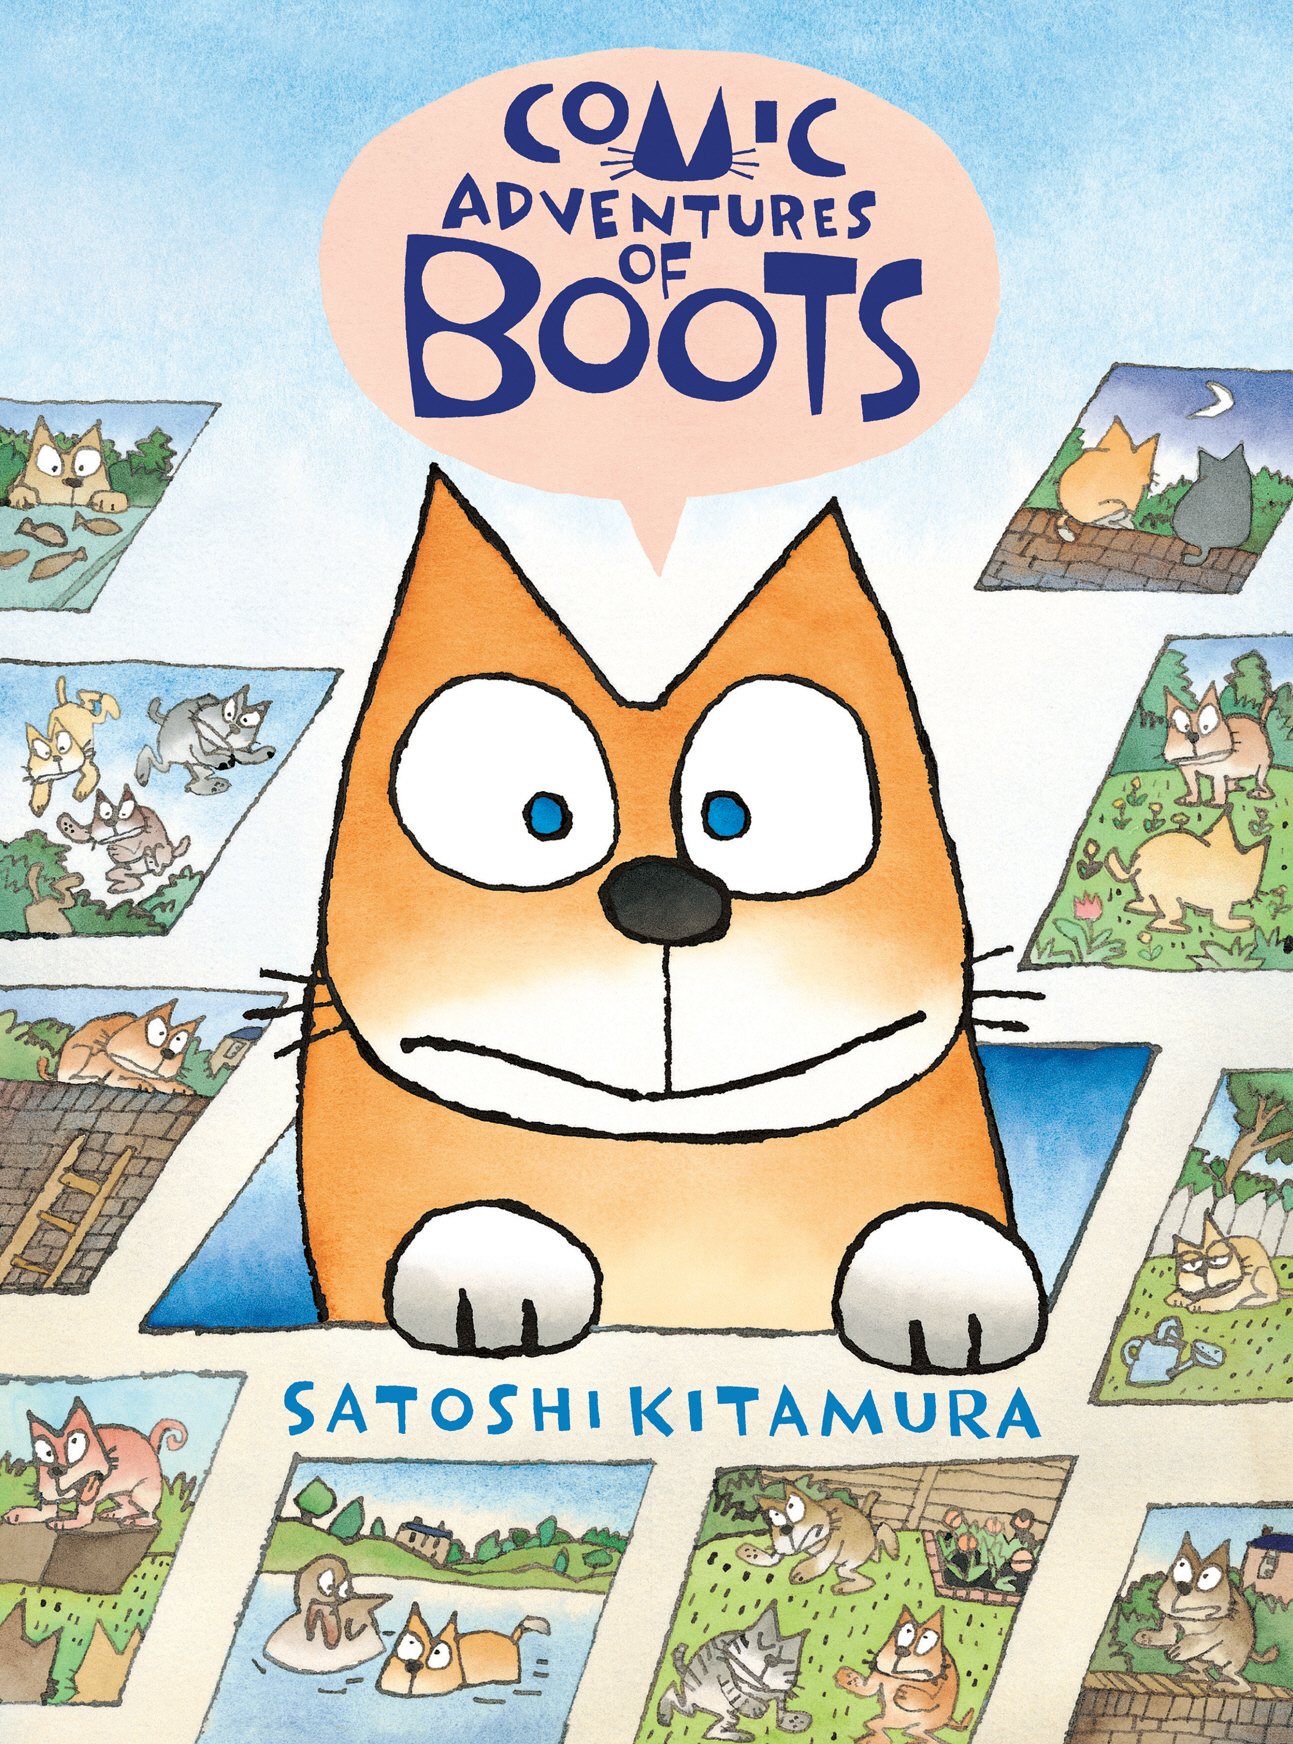 Comic Adventure of Boots by Satoshi Kitamura